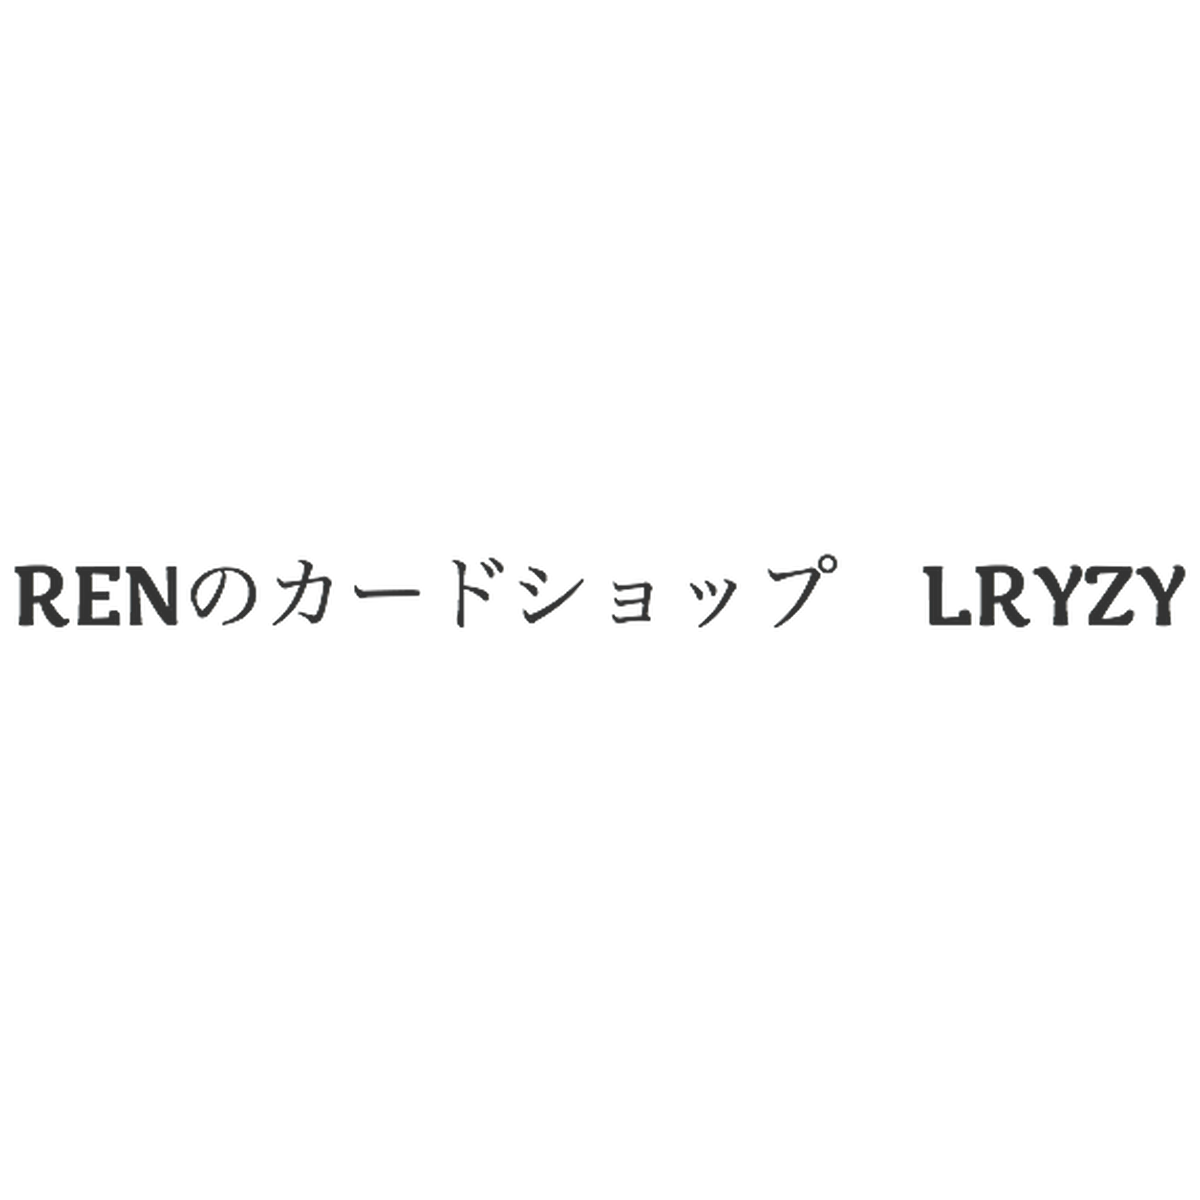 Renのカードショップ Lryzy